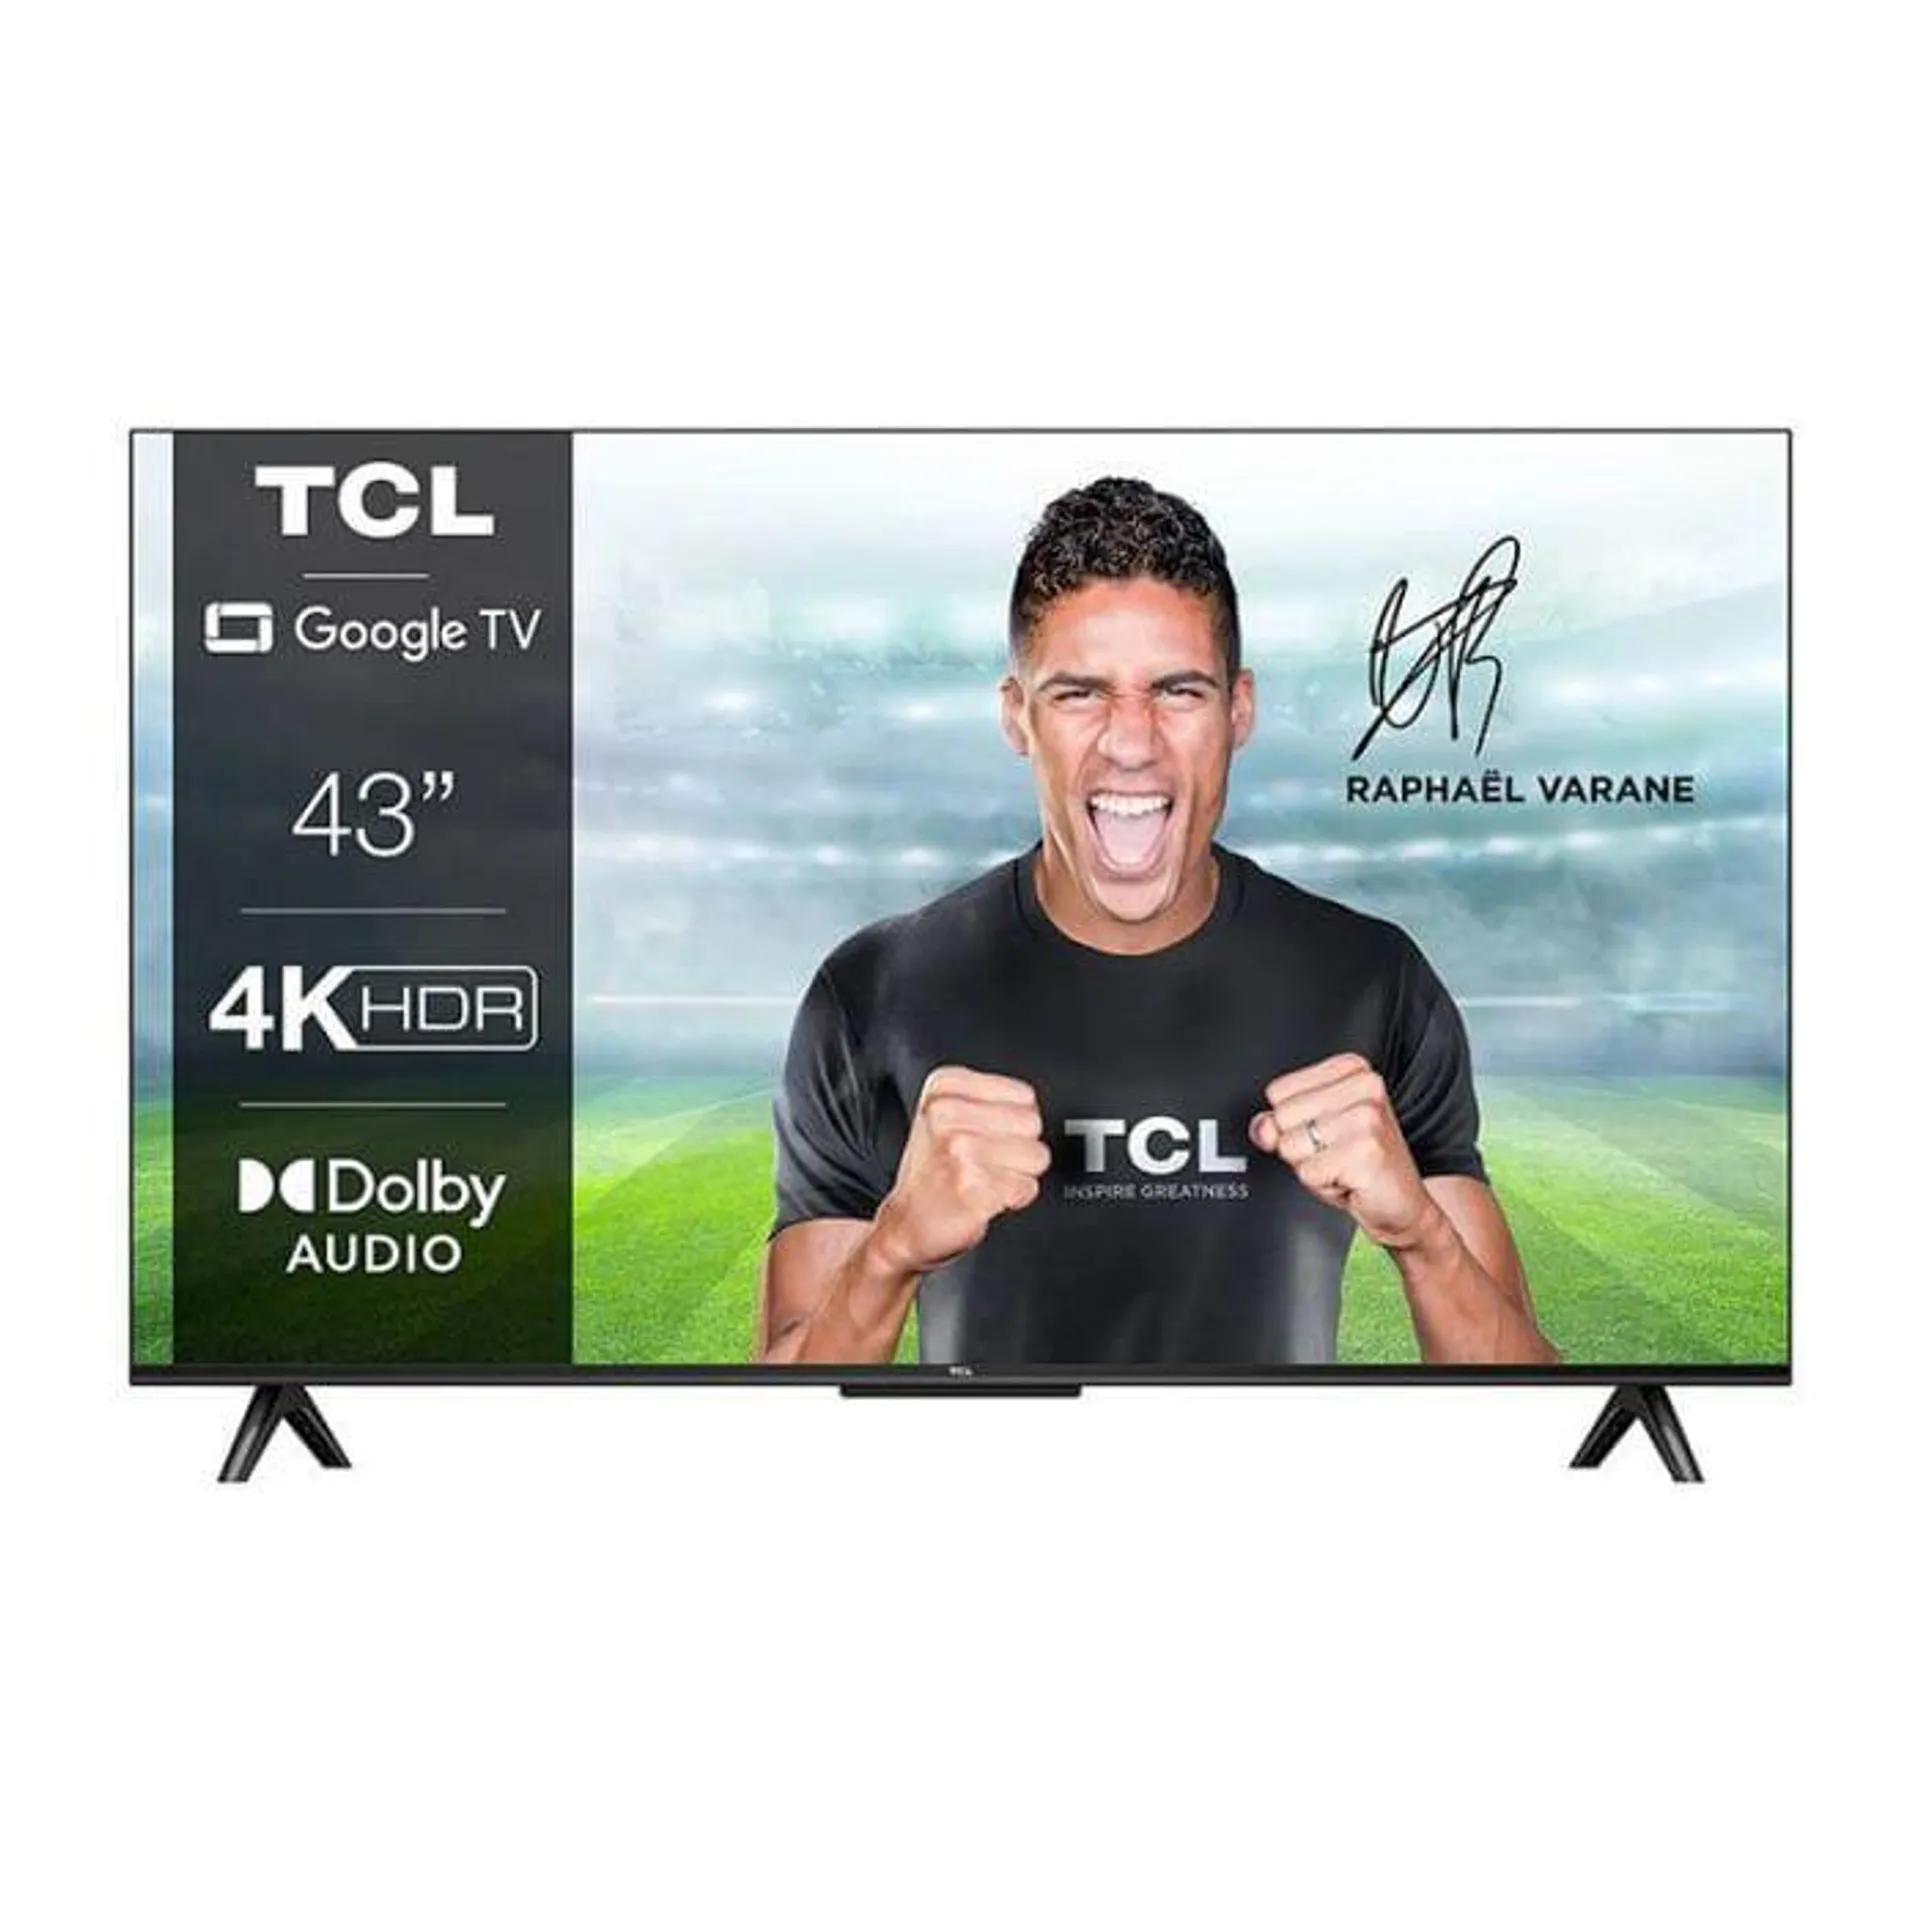 TV UHD 4K 43" TCL 43P631 Google TV